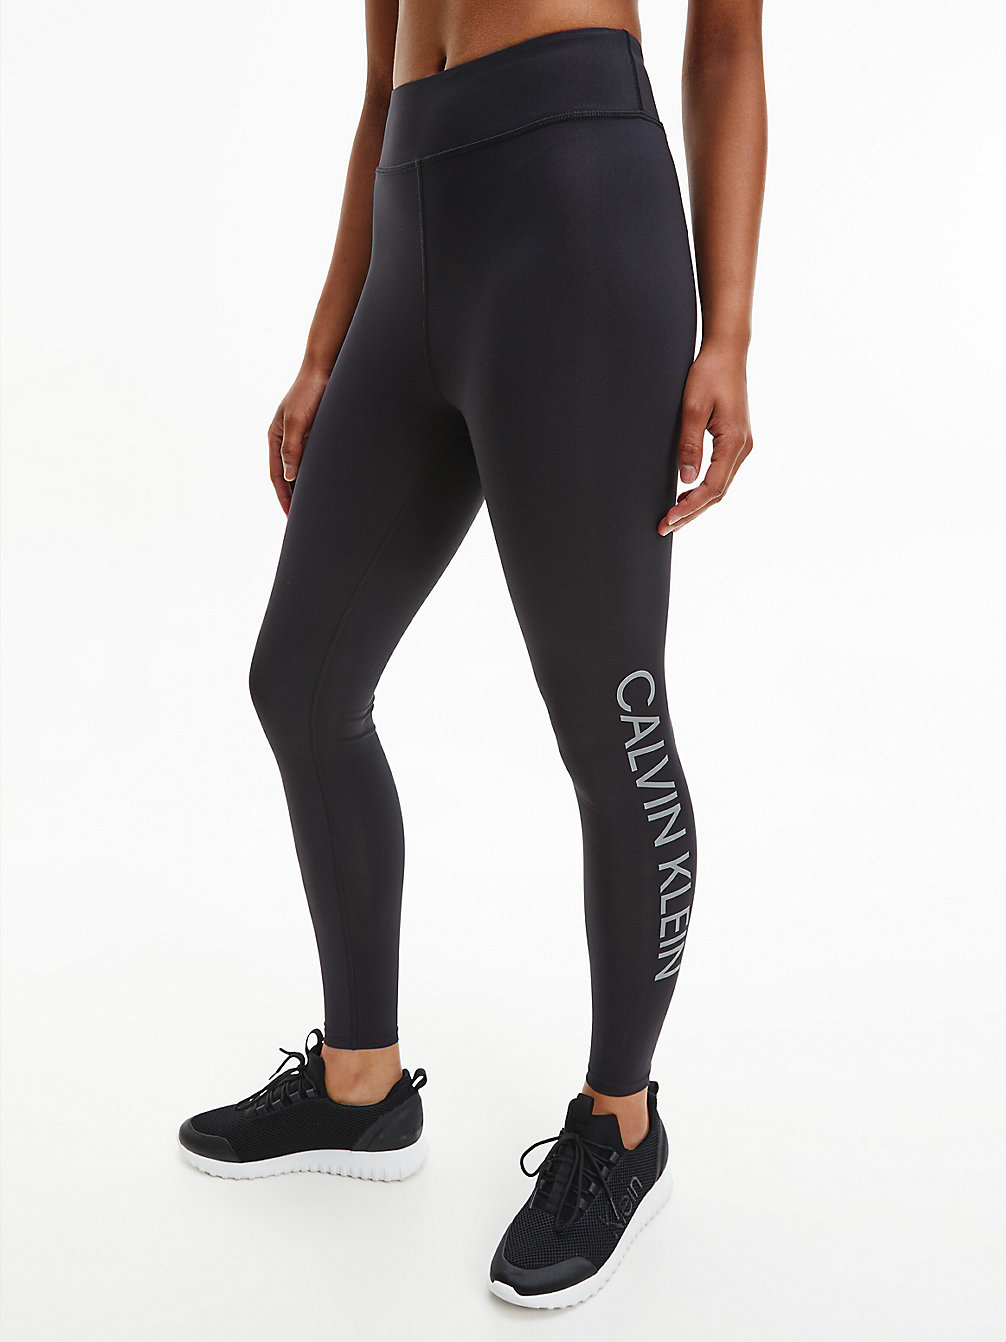 CK BLACK/REFLECTIVE SILVER Gym Leggings undefined women Calvin Klein